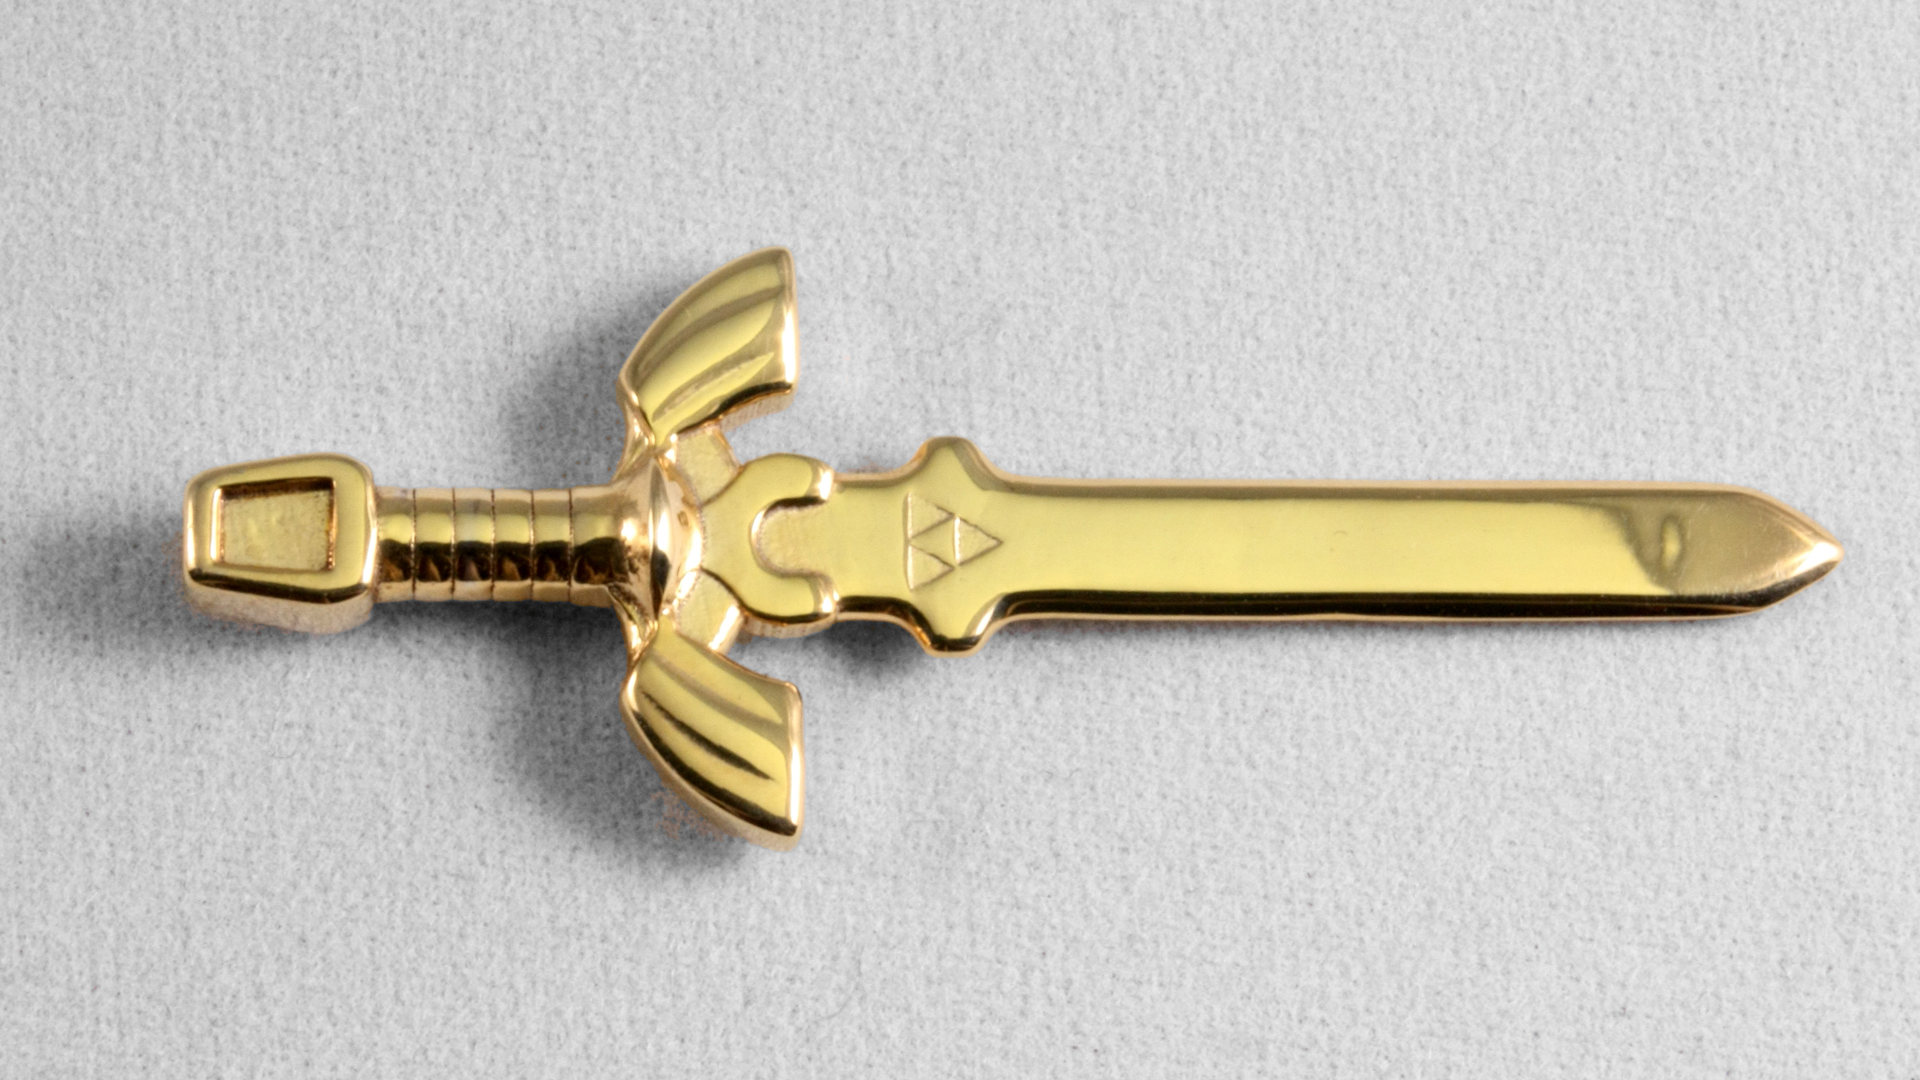 3D PRINTED GOLD LEGO MASTER SWORD